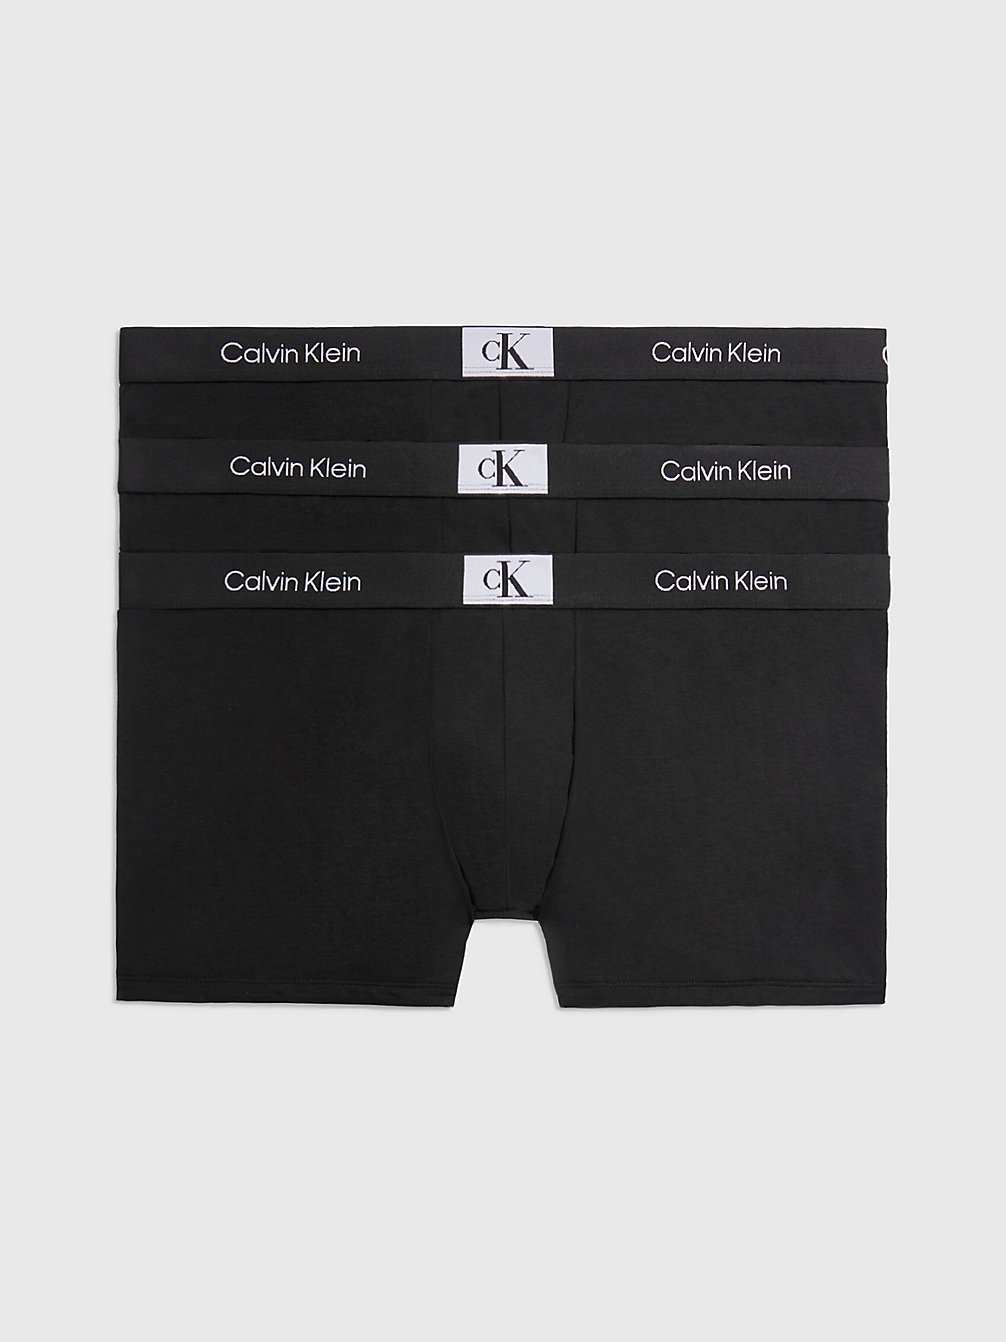 BLACK/ BLACK/ BLACK > 3-Er Pack Trunks In Übergröße - Ck96 > undefined Herren - Calvin Klein